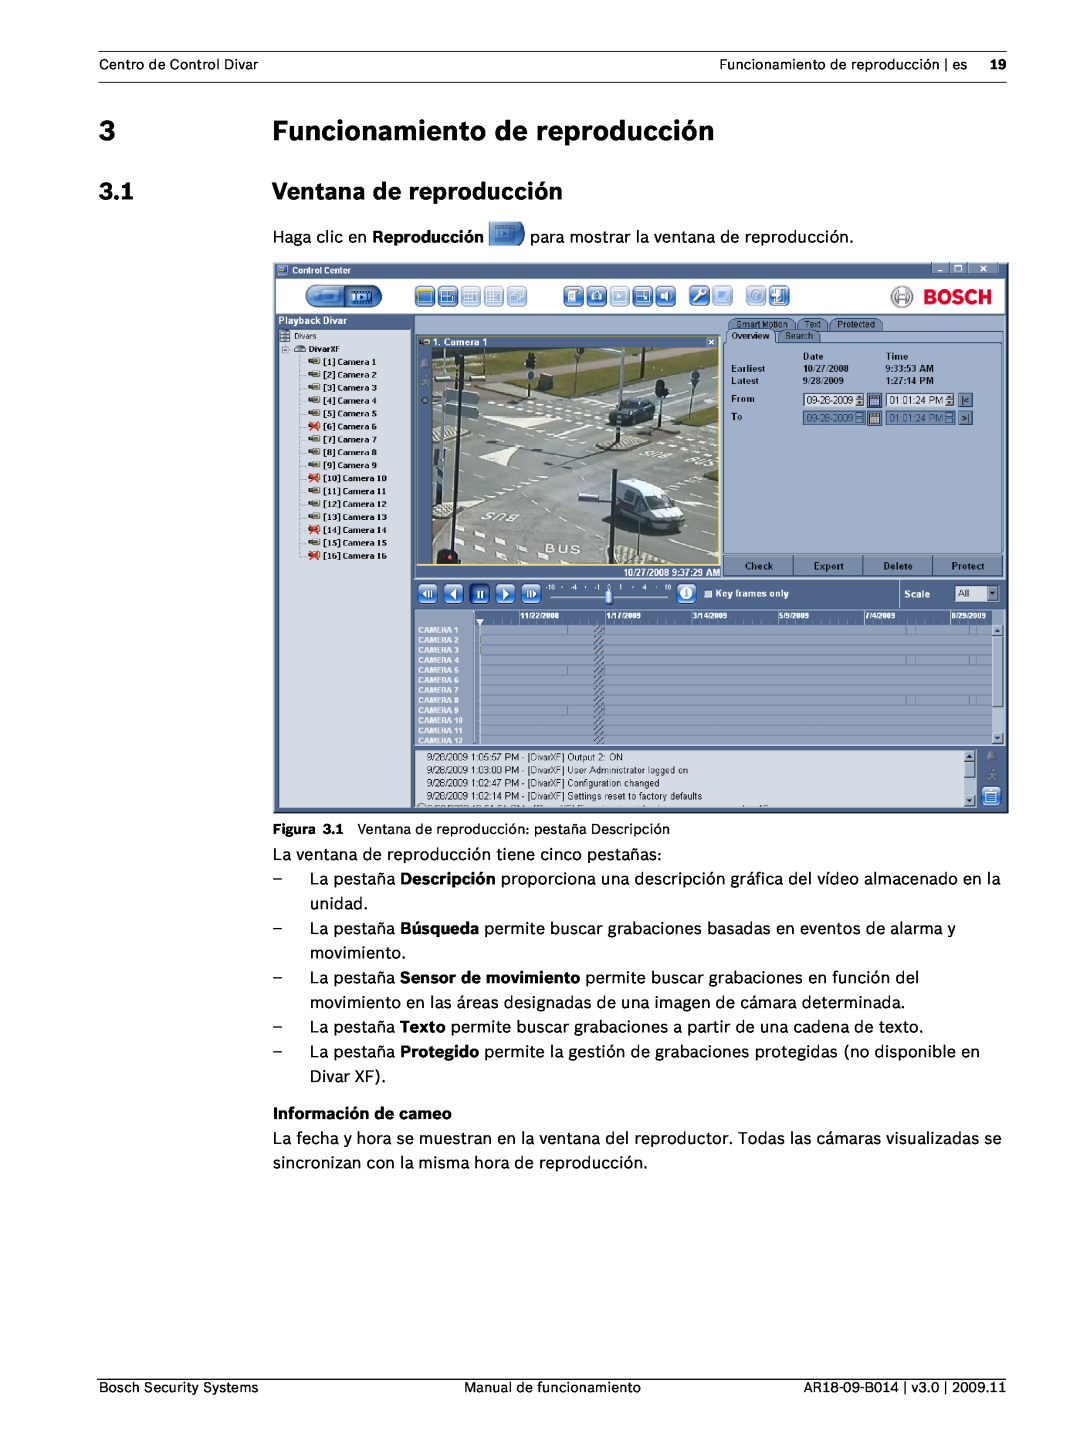 Bosch Appliances AR18-09-B014 manual Funcionamiento de reproducción, Ventana de reproducción, Información de cameo 